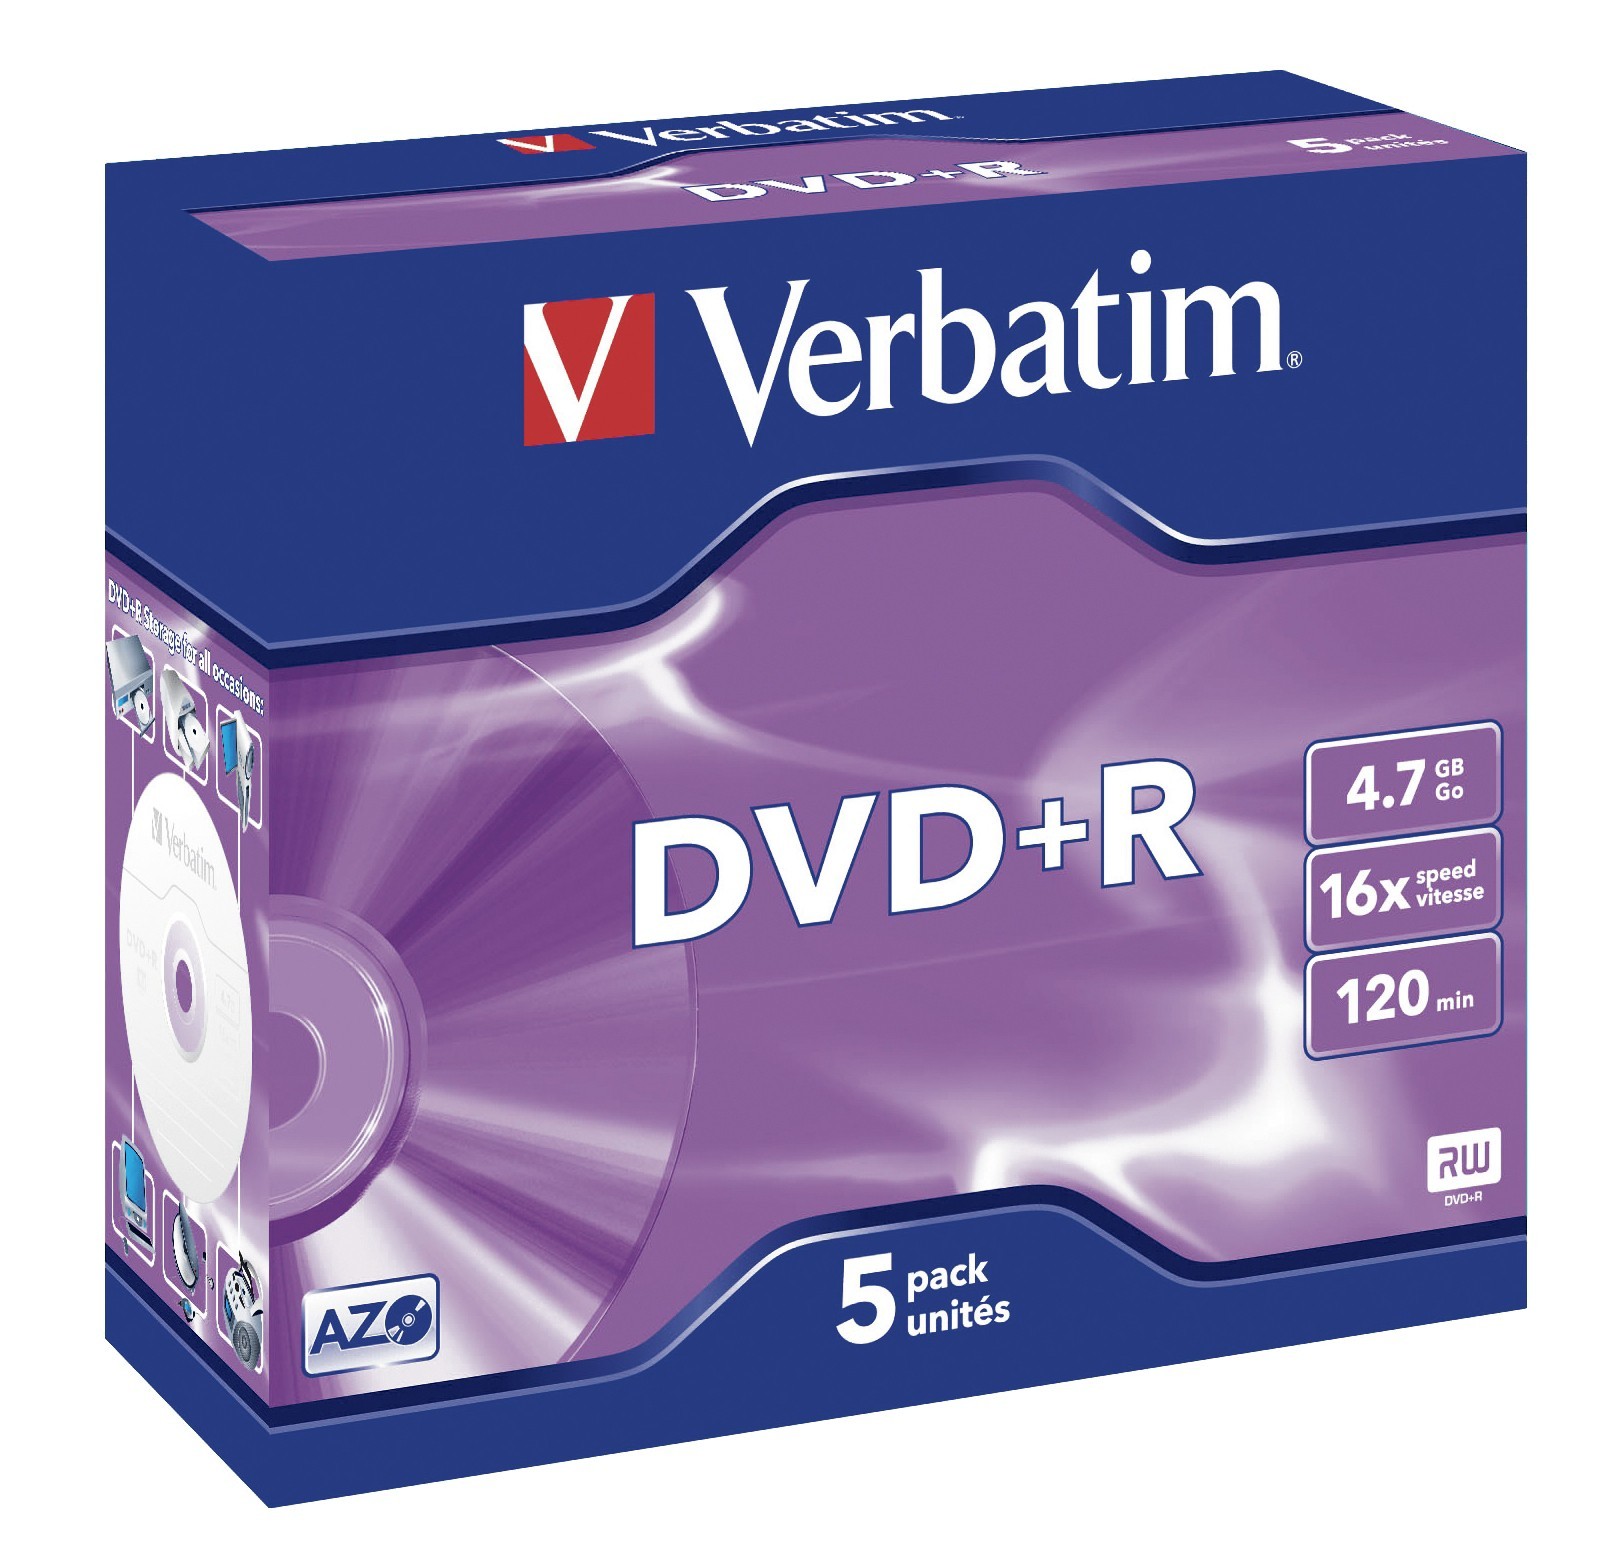 Verbatim DVD+R | Elgiganten